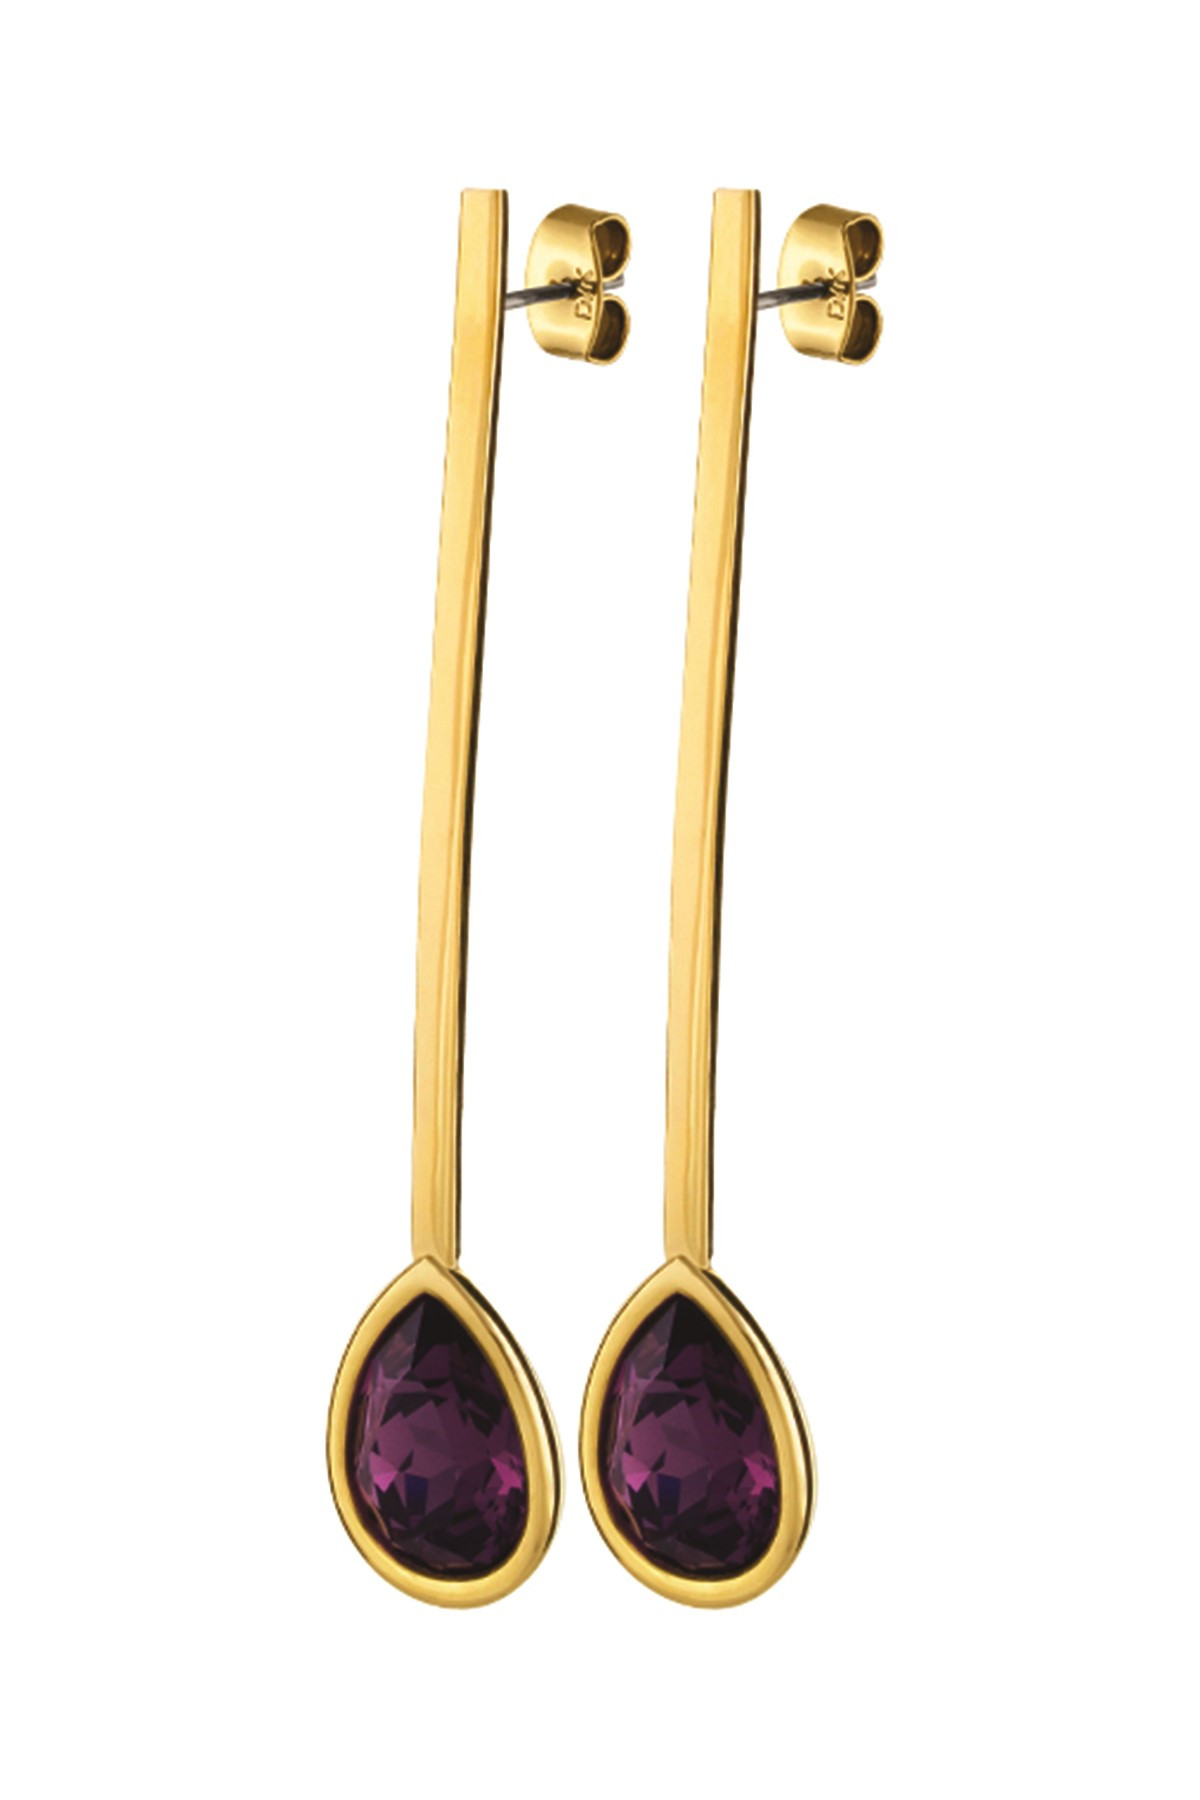 Dyrberg Kern Dyrberg/Kern Verona Earring, Color: Gold/Purple, Onesize, Women